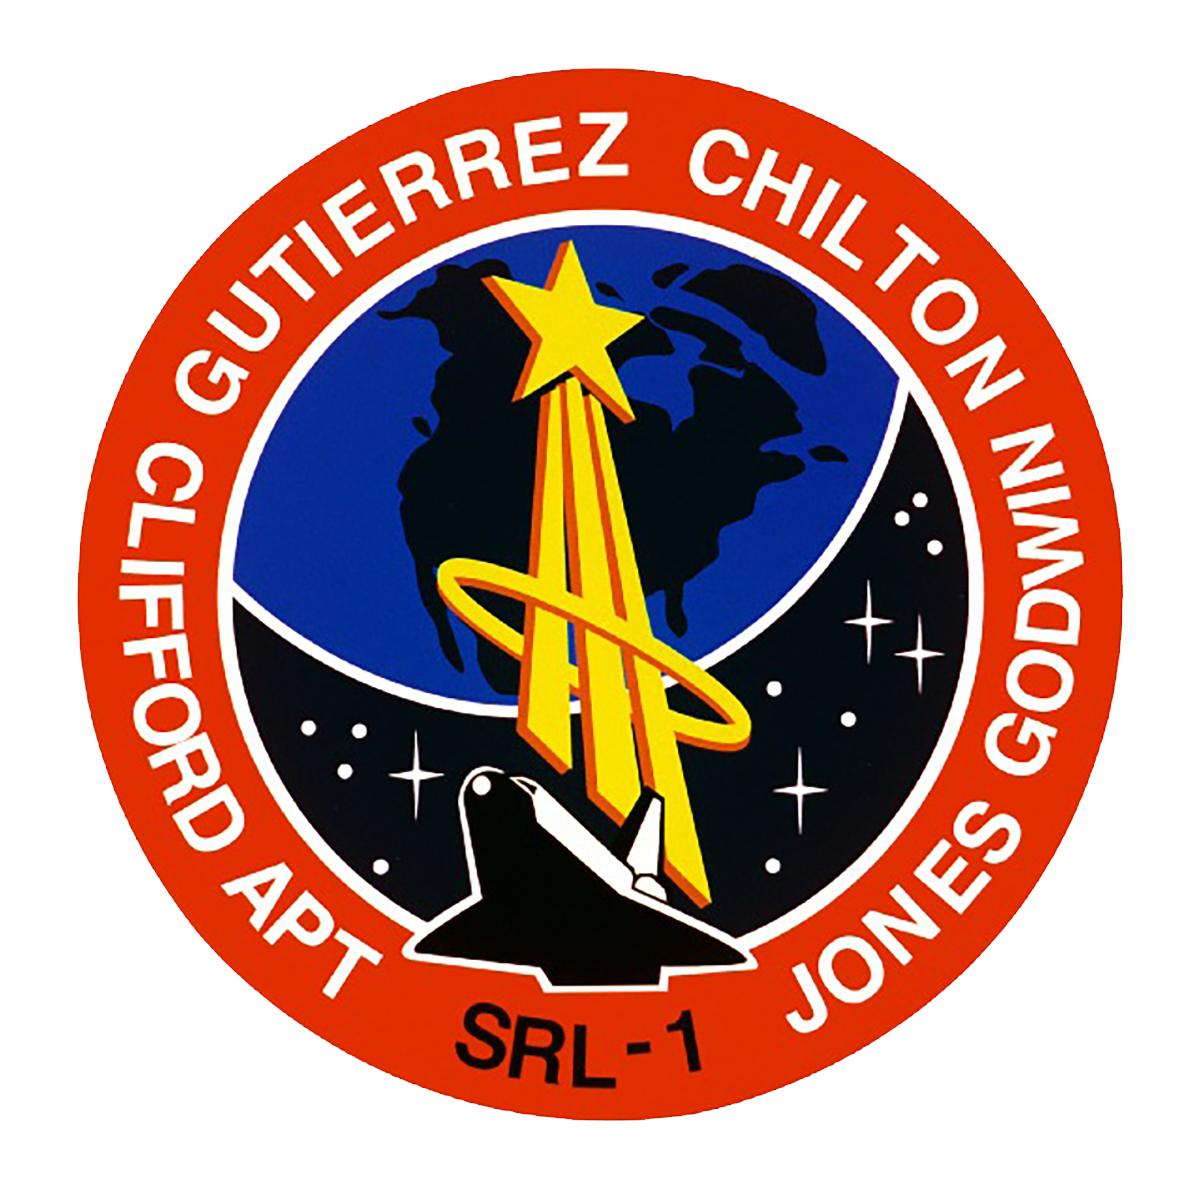 STS-59 (Endeavour)